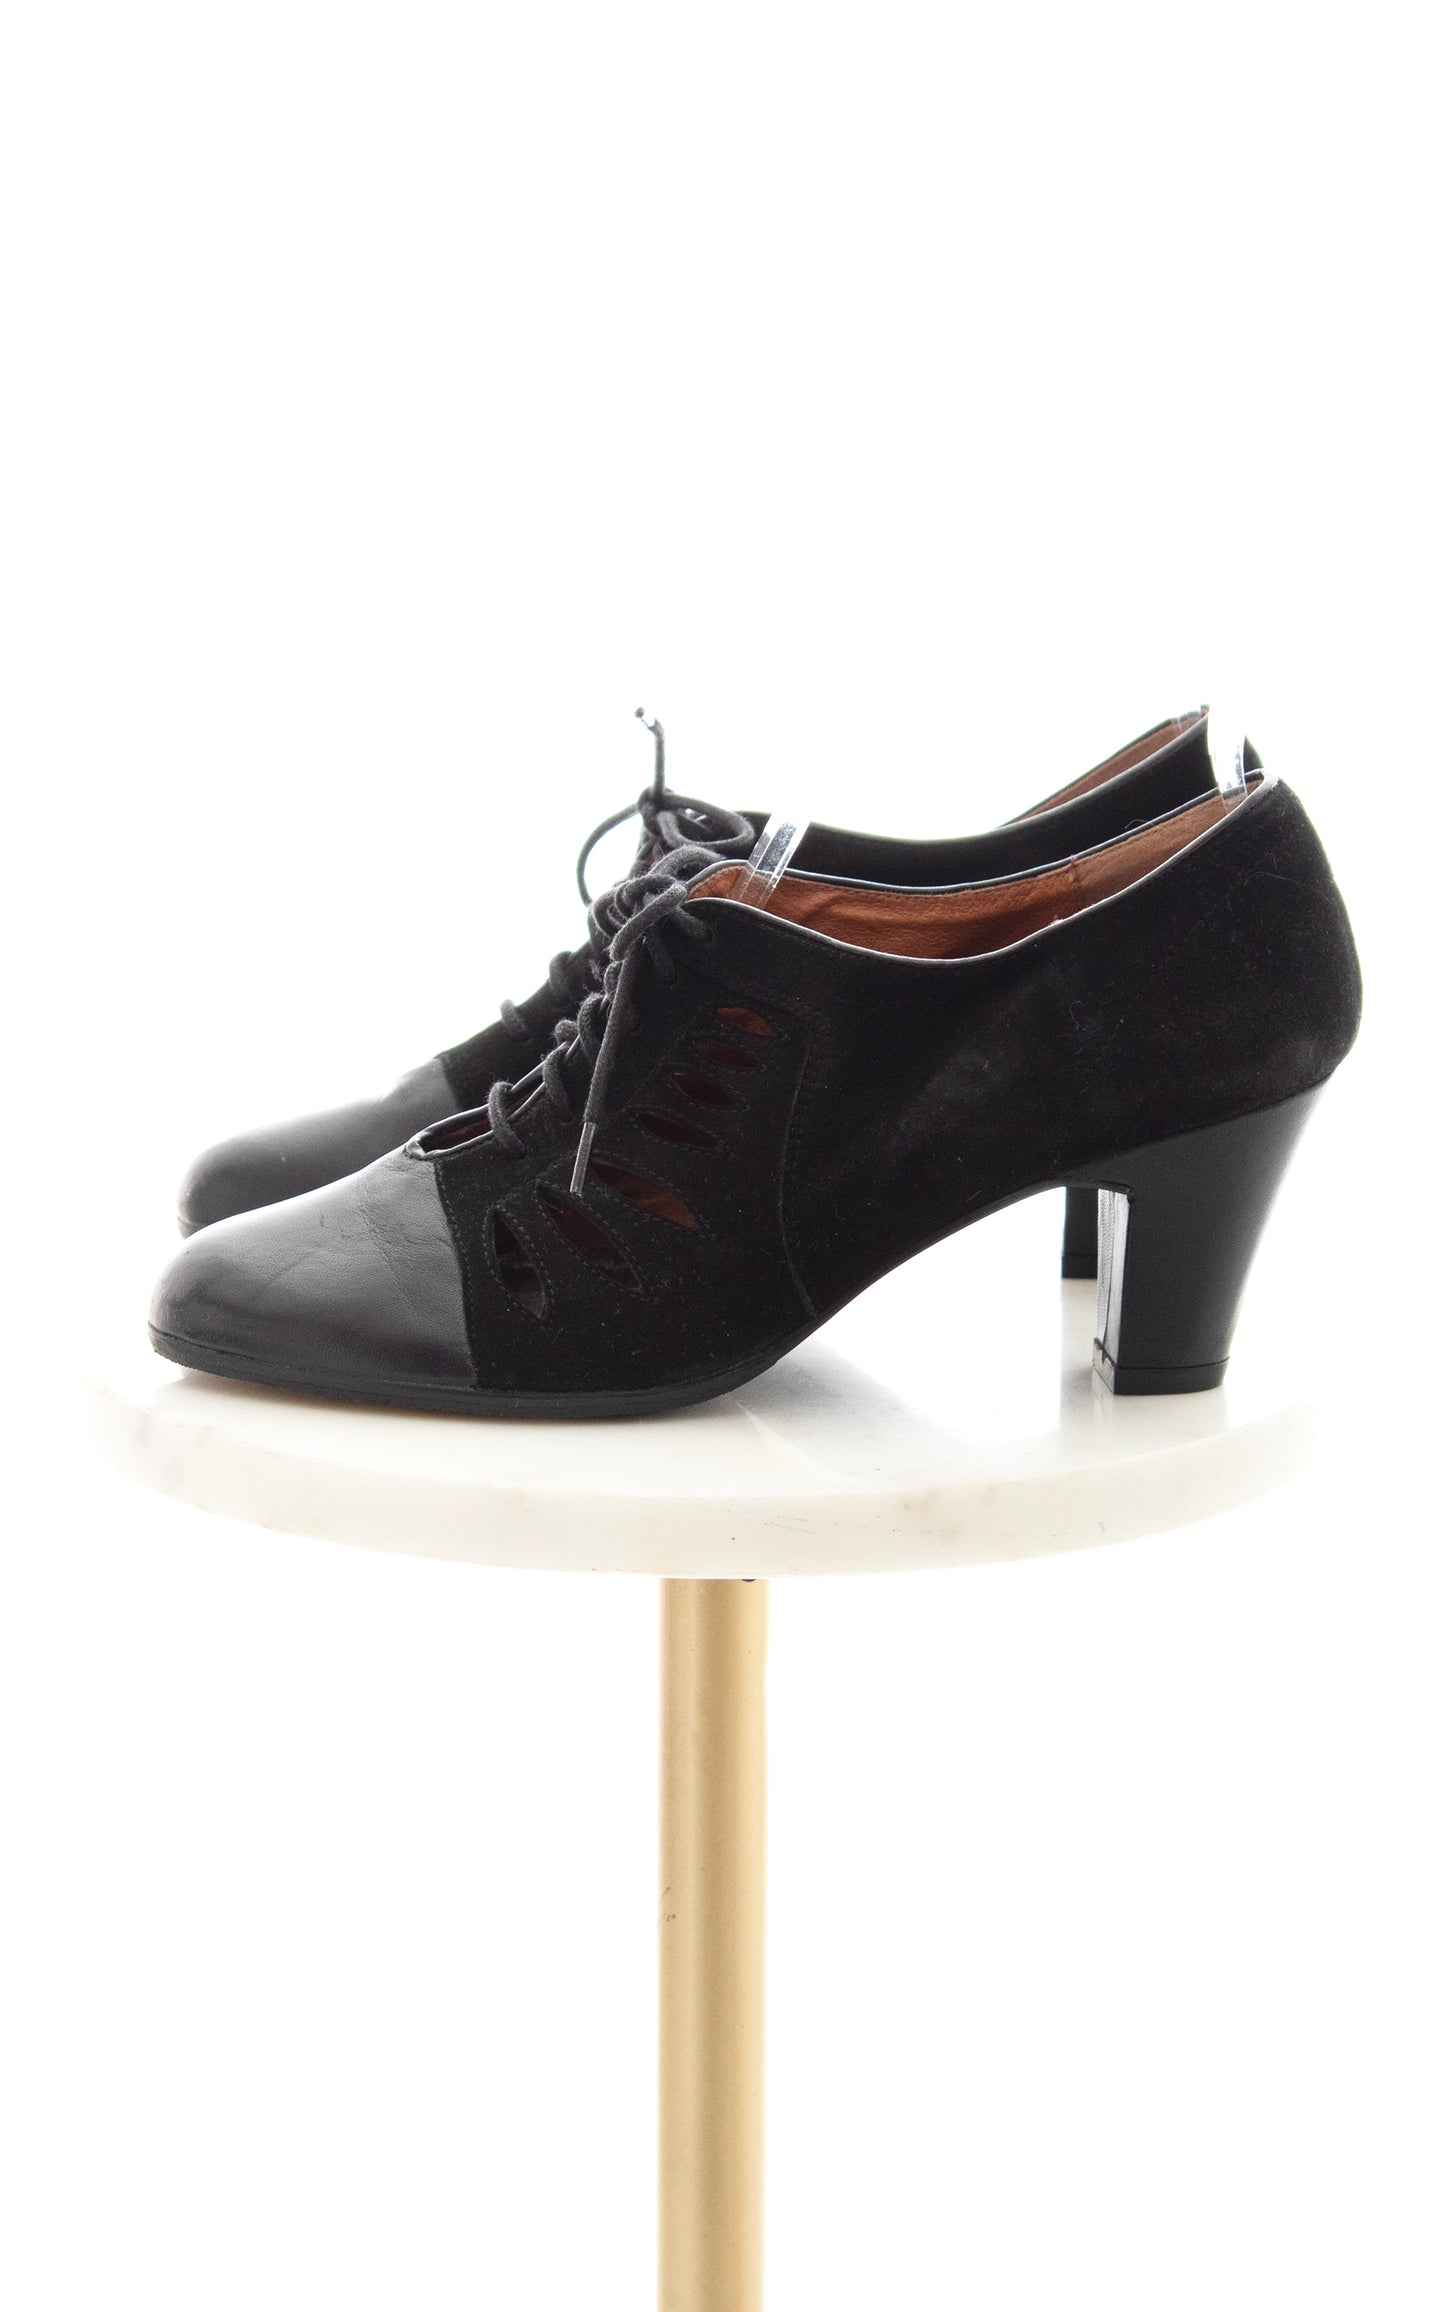 Modern REMIX 1930s Style "Uptown" Heels | size US 7.5